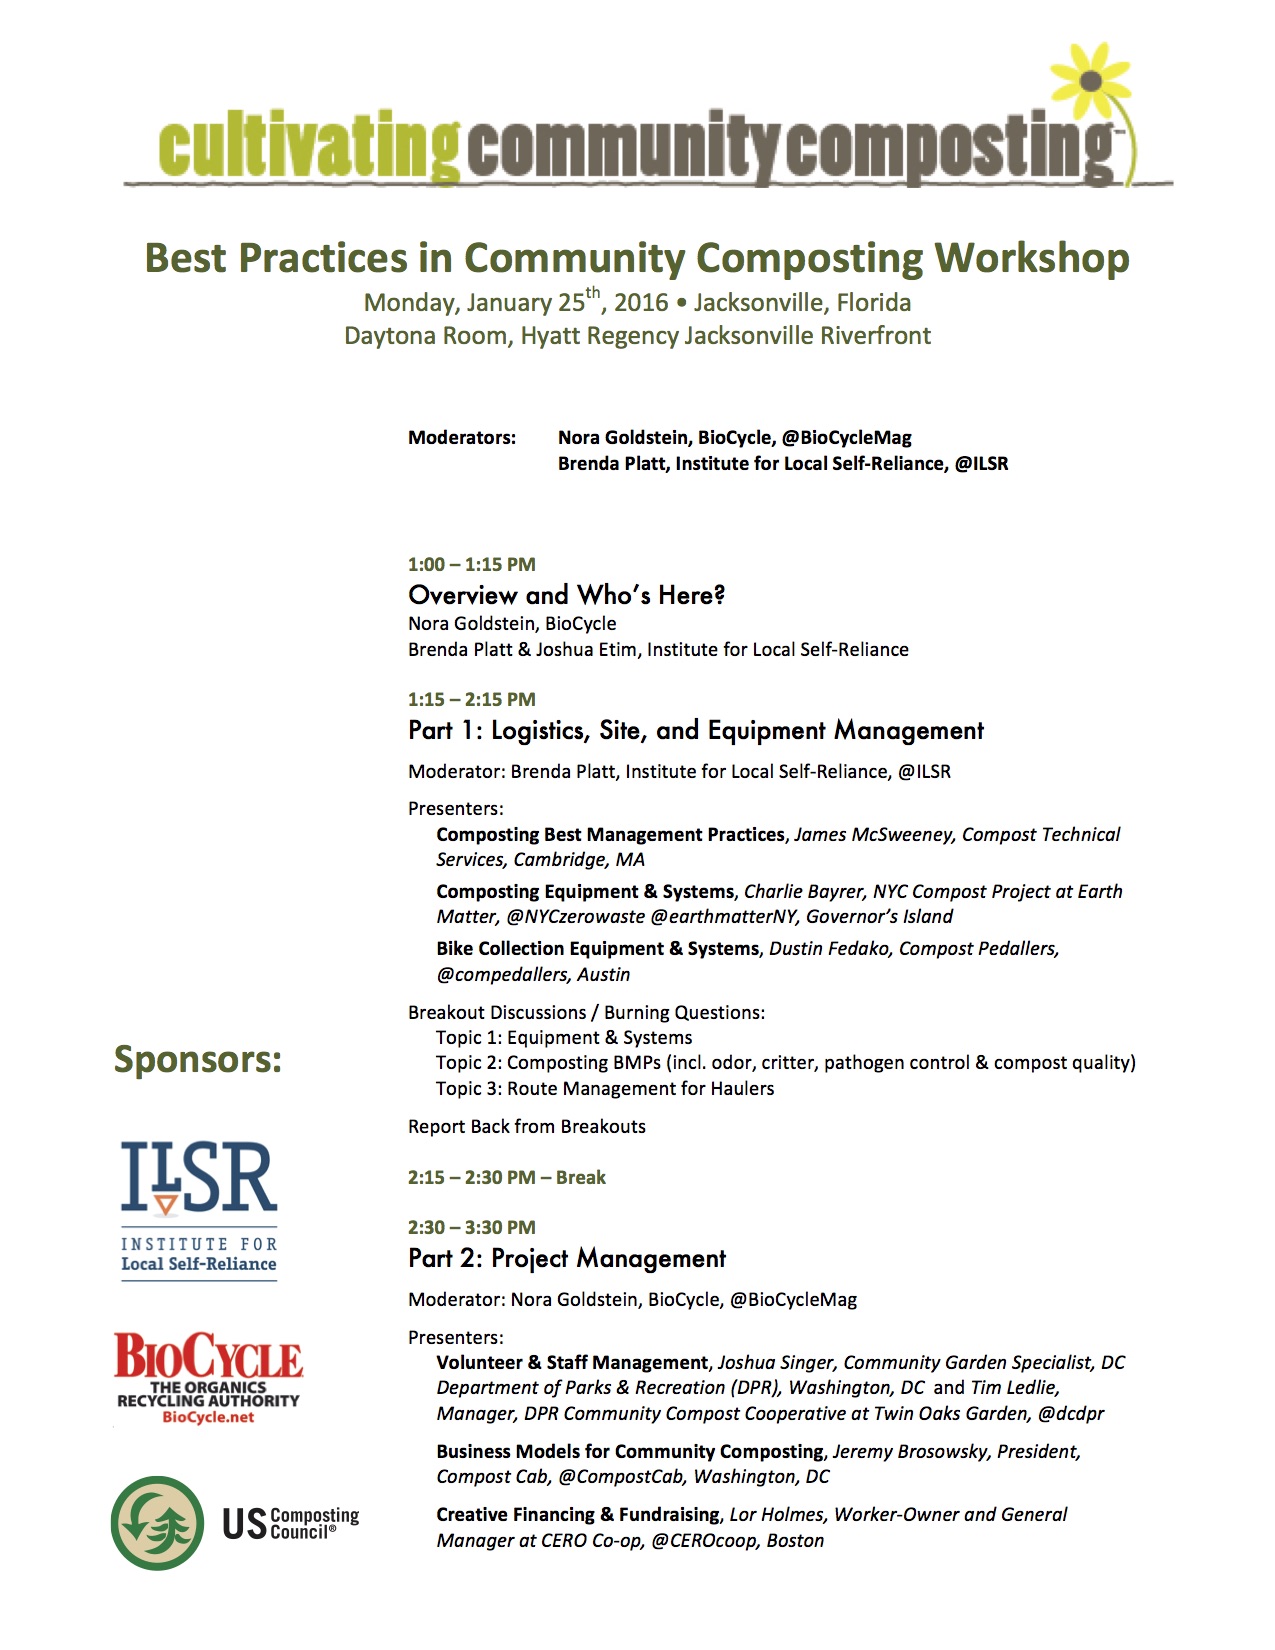 Best Practices in Community Composting agenda 01-24-16 version (1)